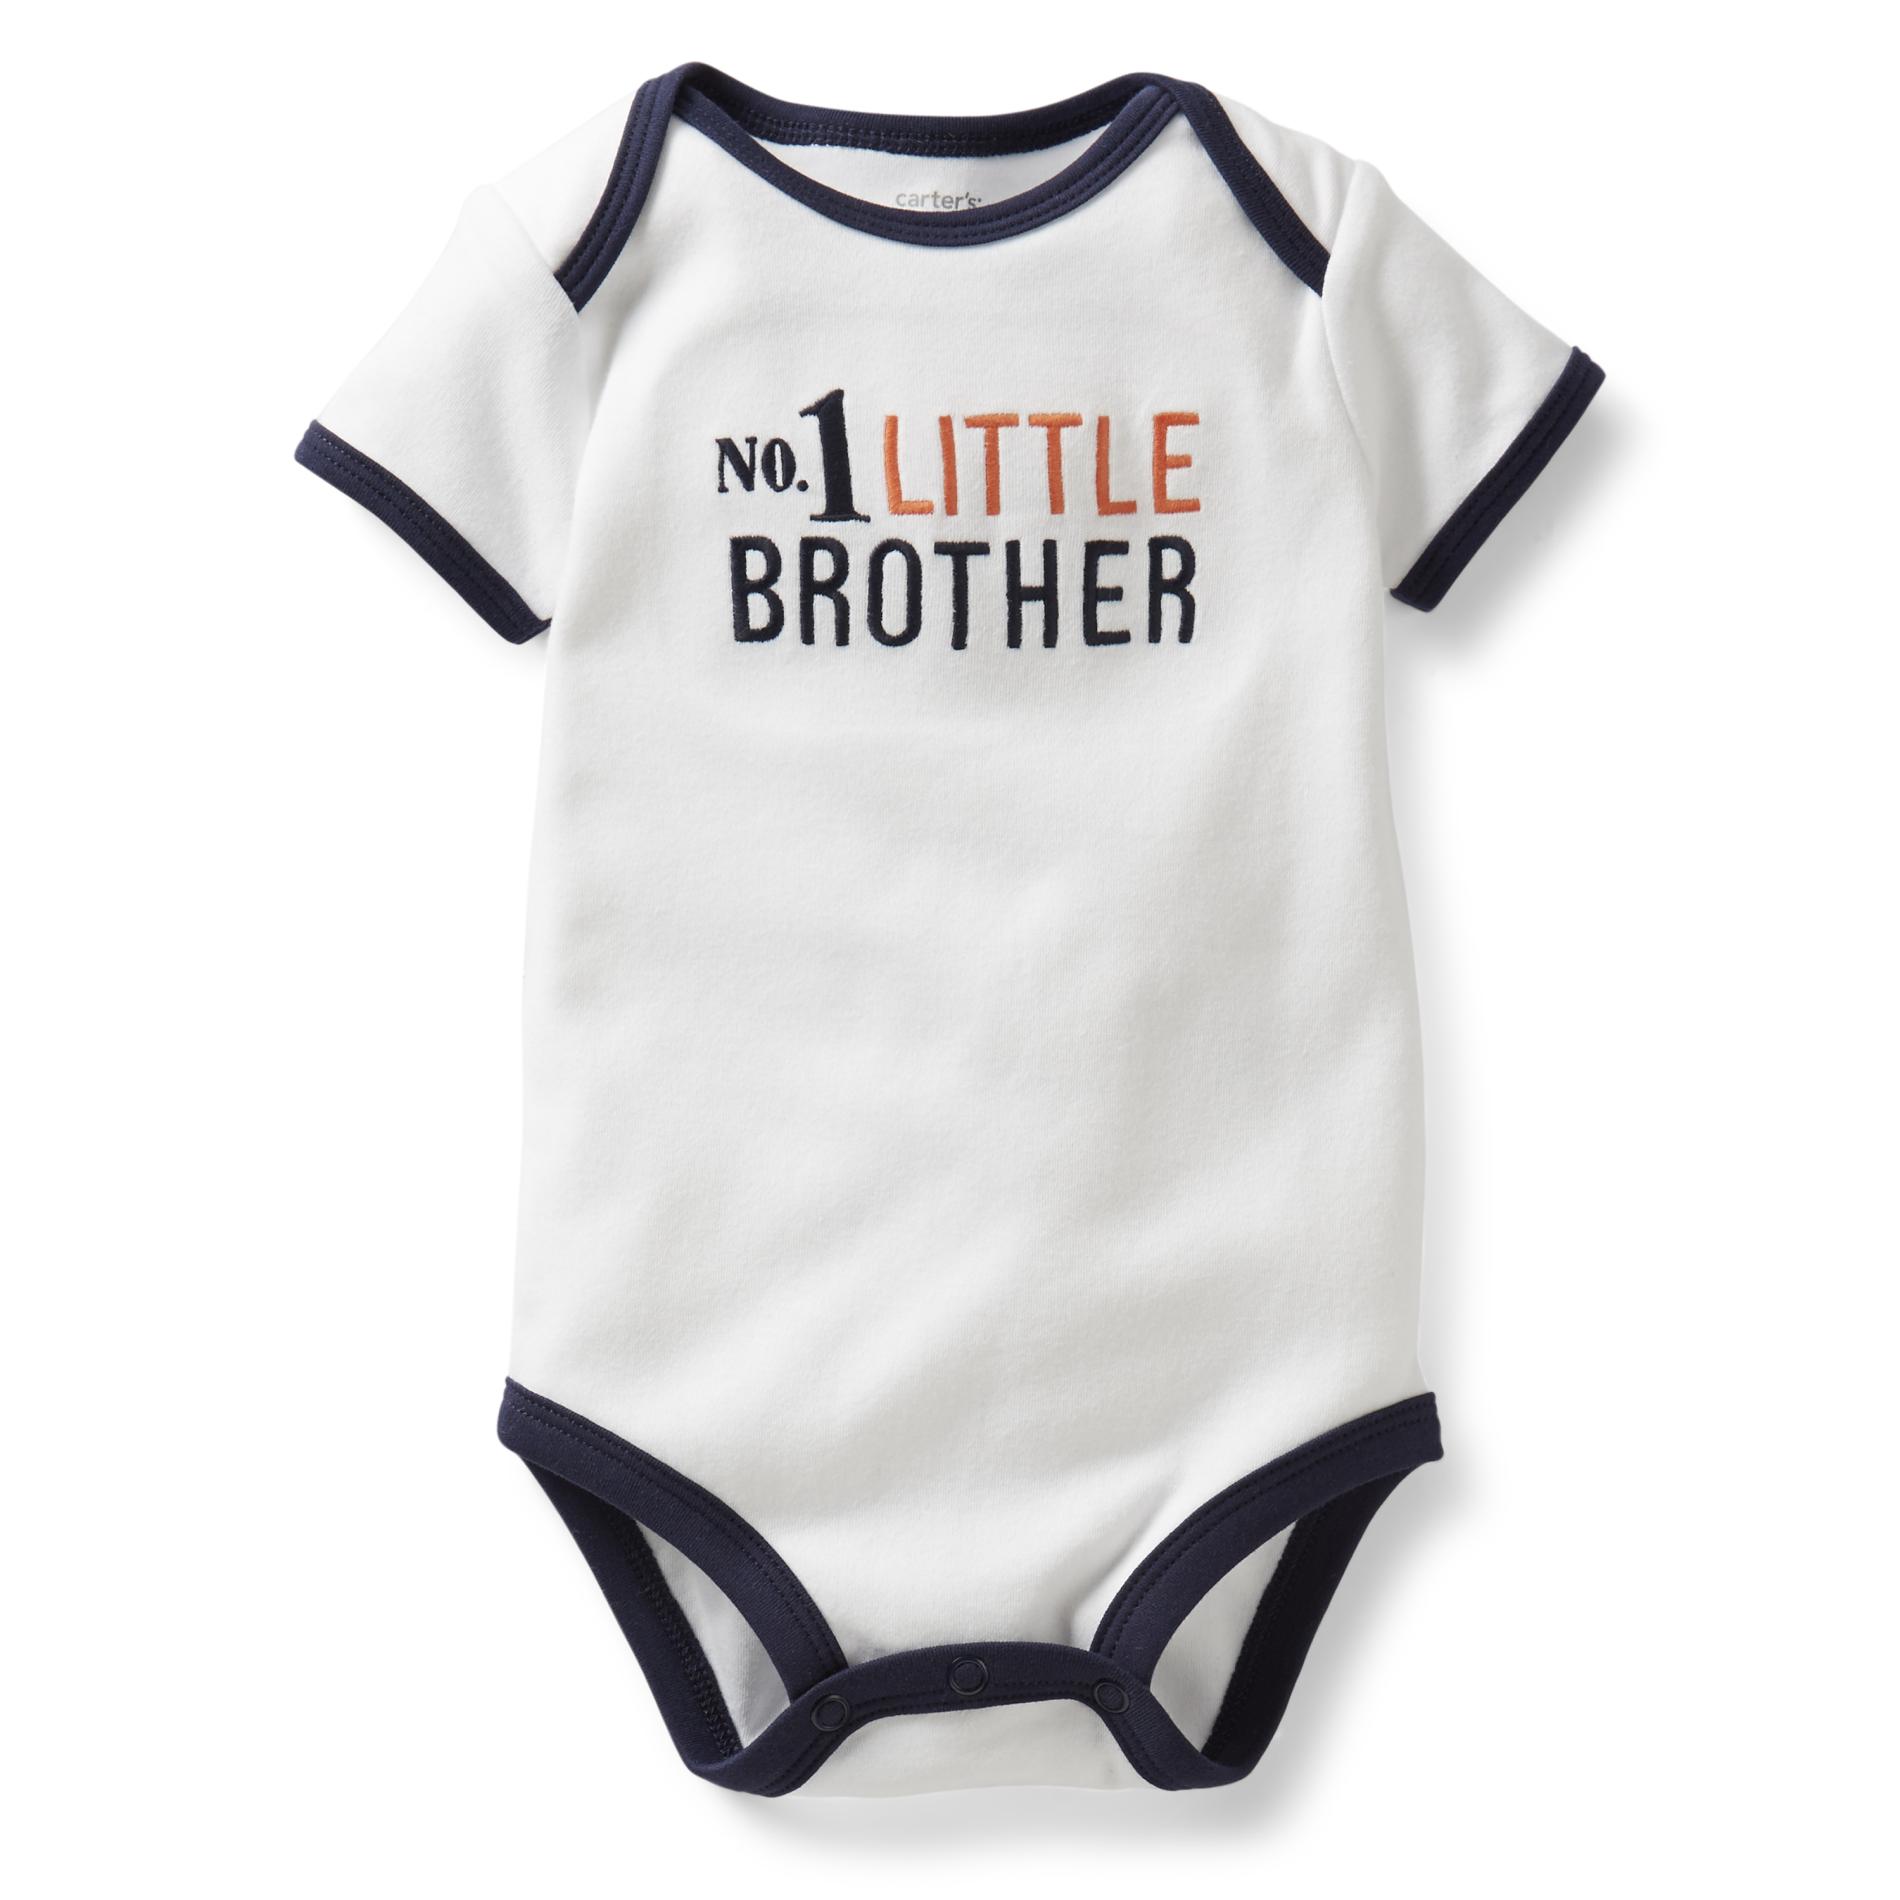 Carter's Newborn & Infant Boy's Bodysuit - No. 1 Little Brother